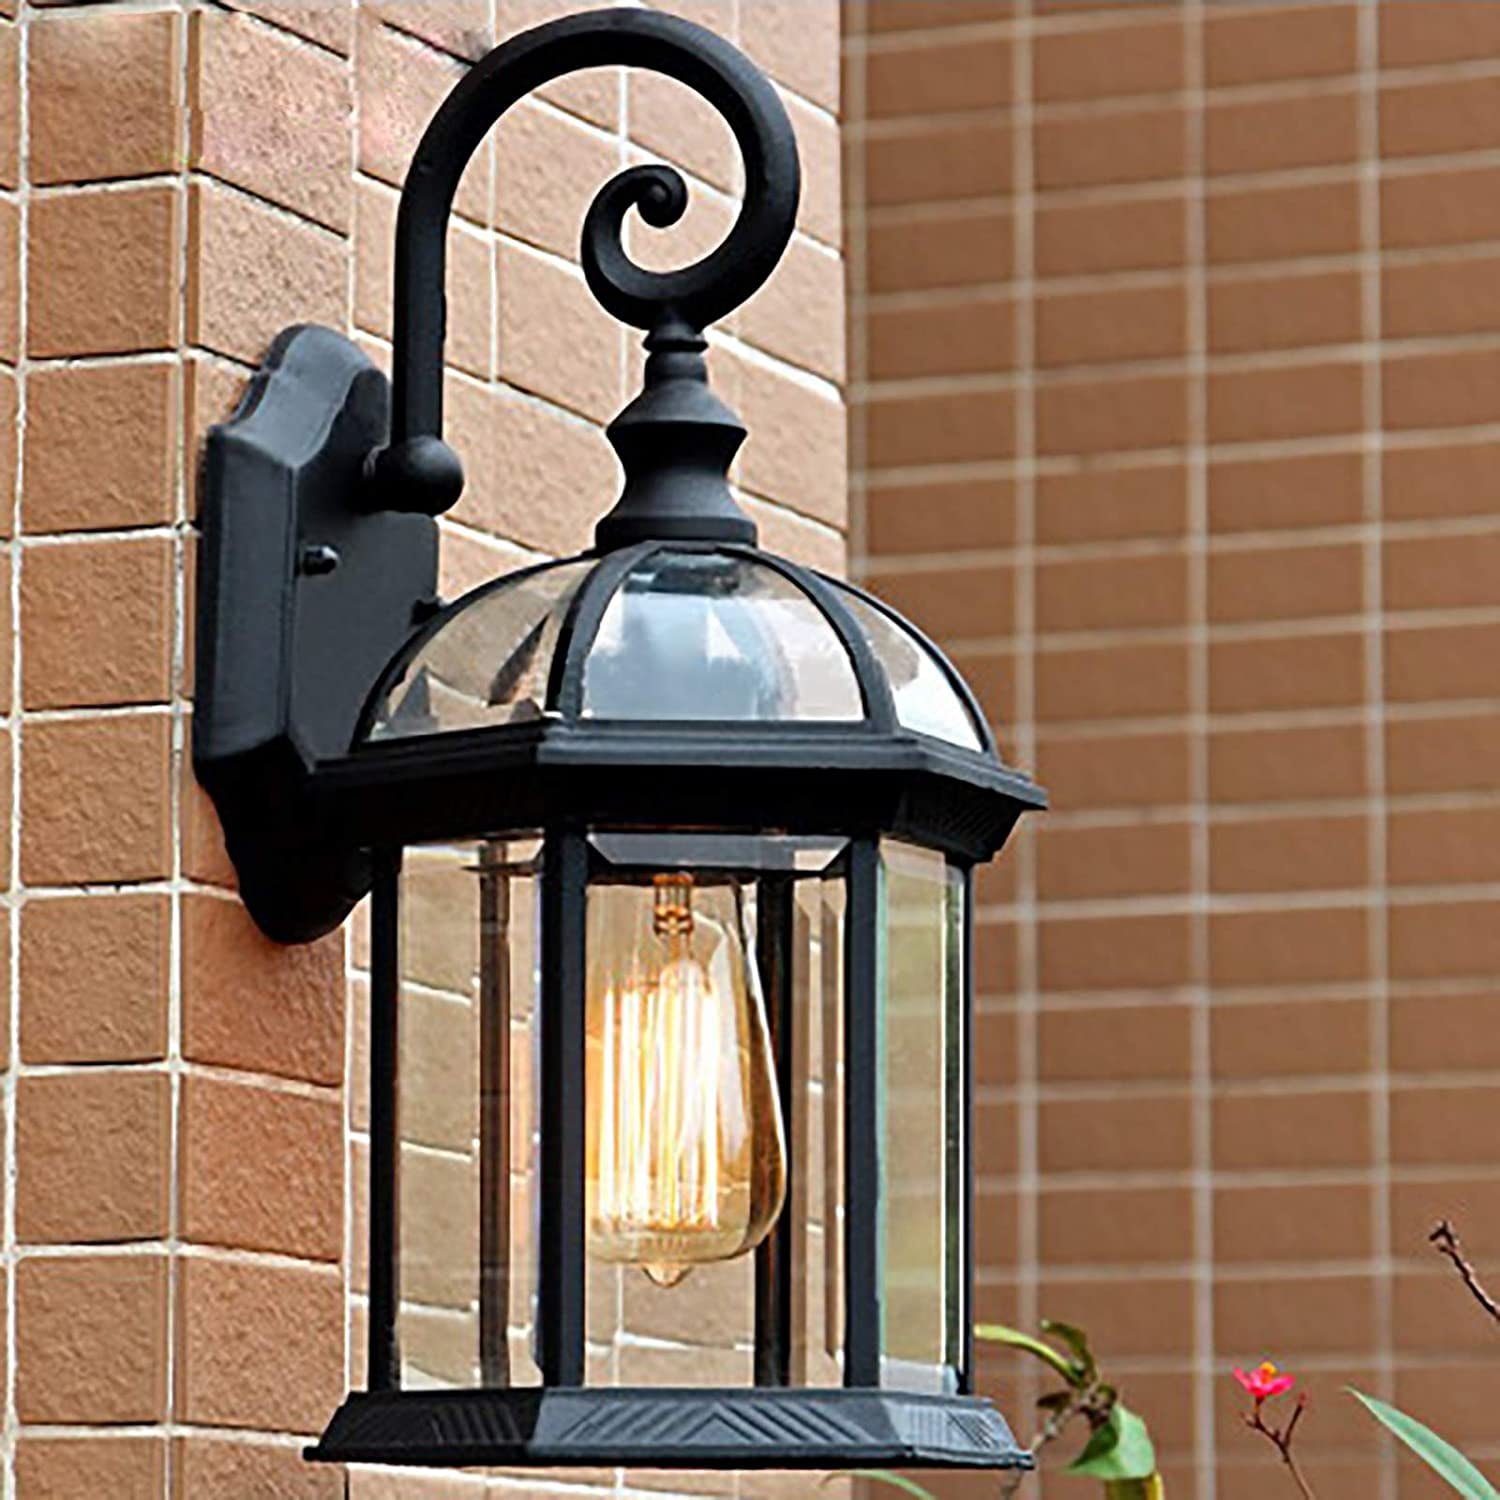 Oukaning Wall-Mounted Lamp Outdoor Garden Light Vintage Coach Lantern Lamp  Porch Sconce